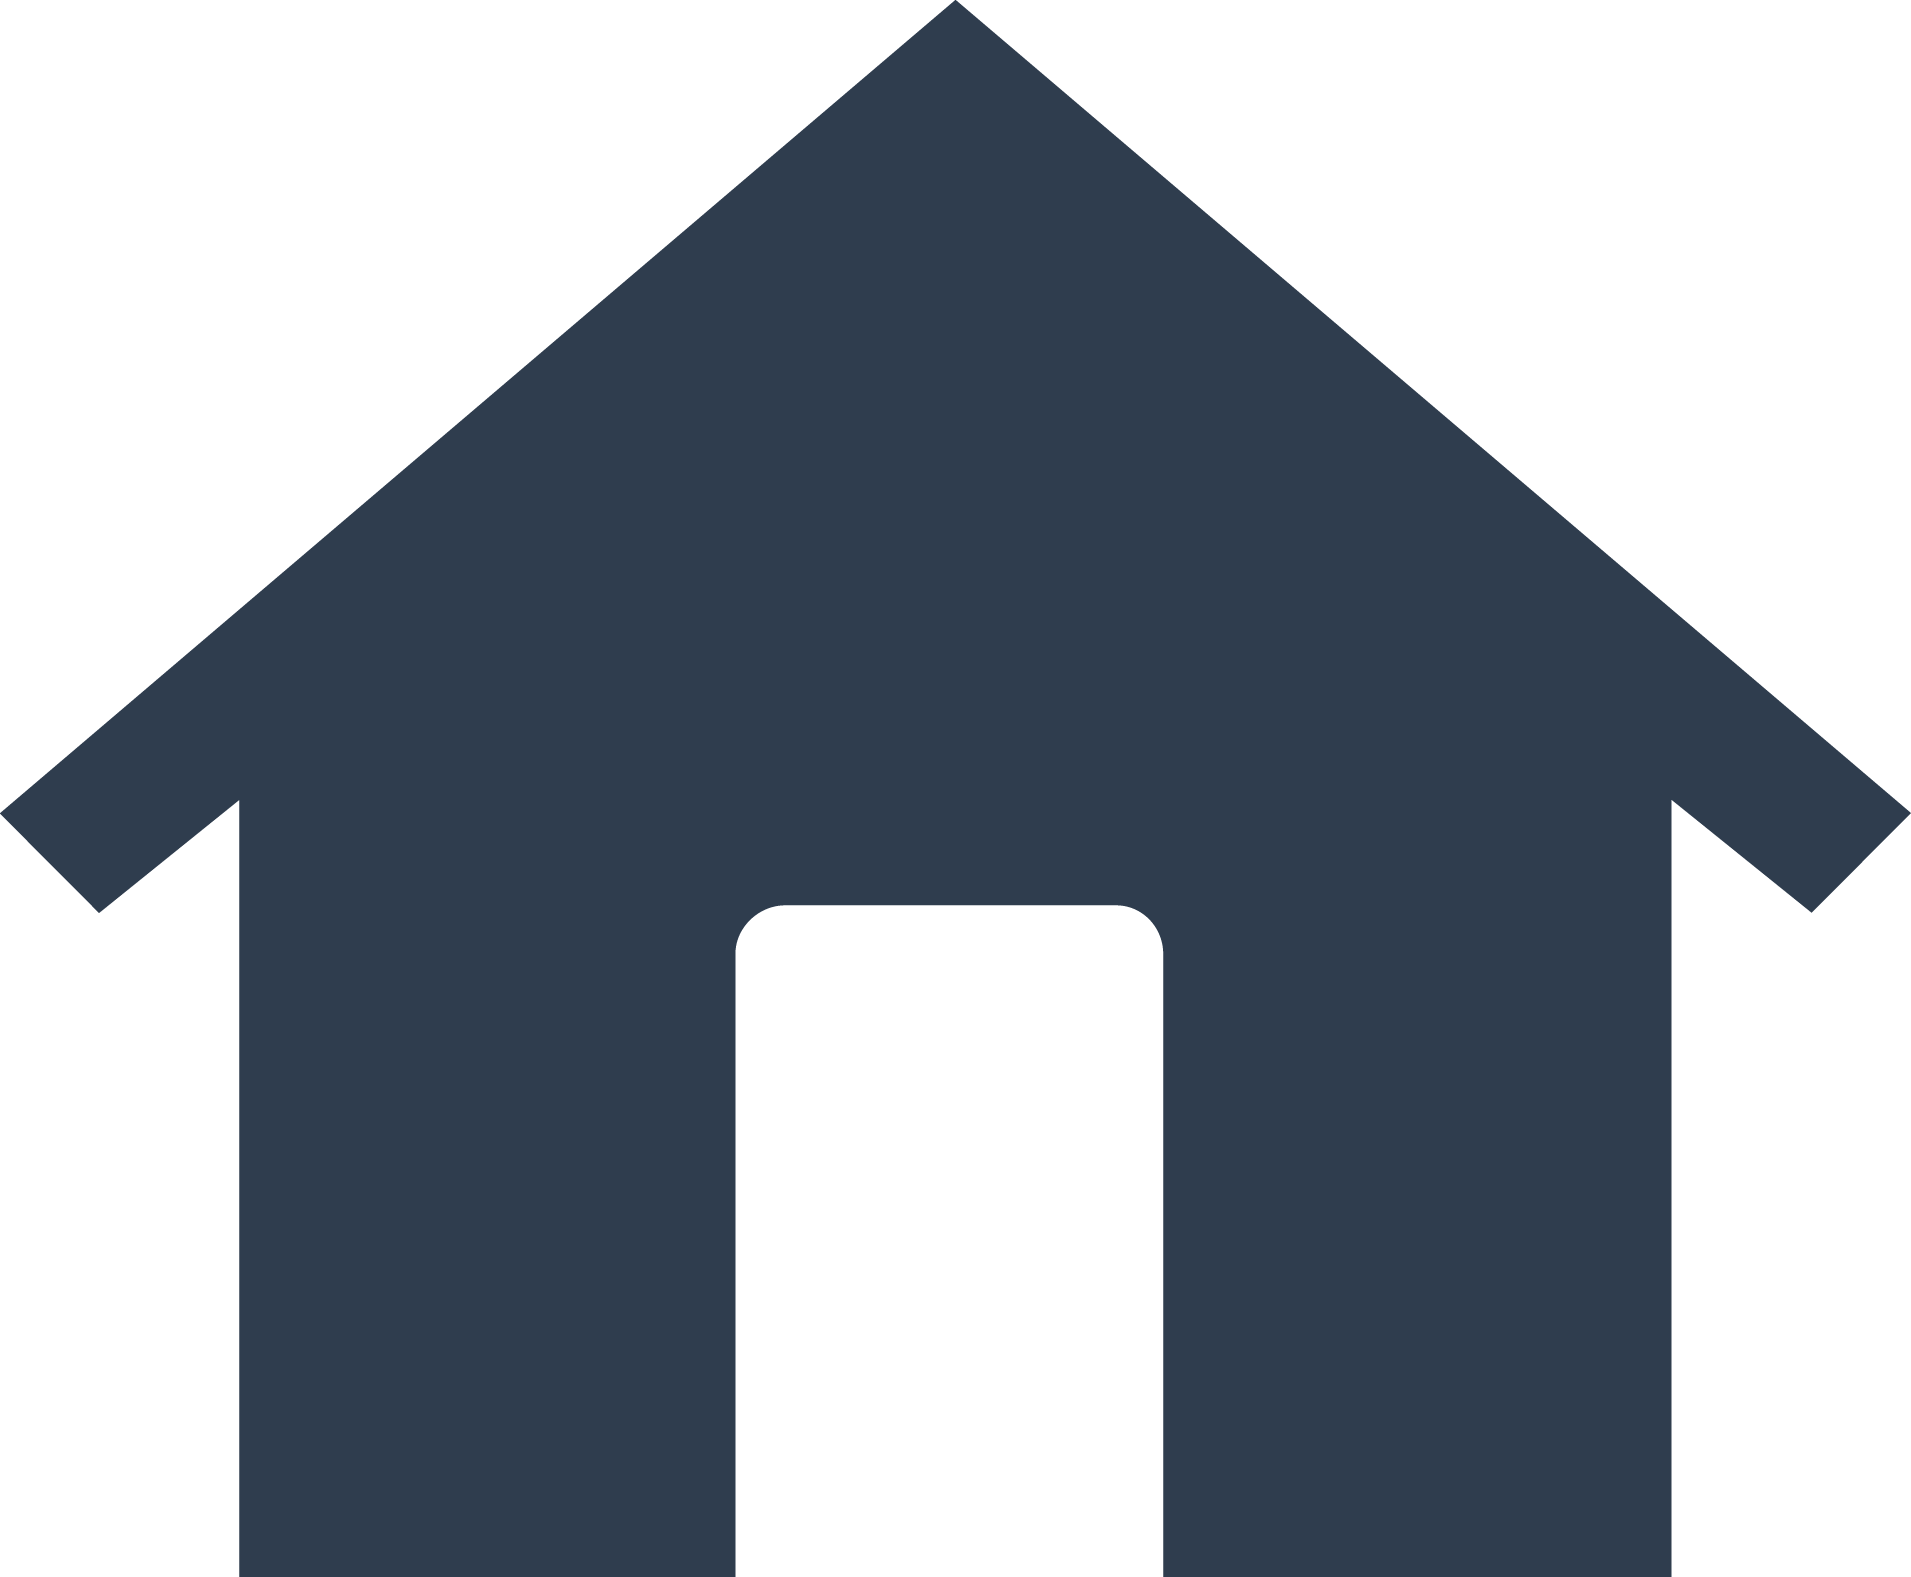 Home Insurance Link - Home Insurance (1911x1577)